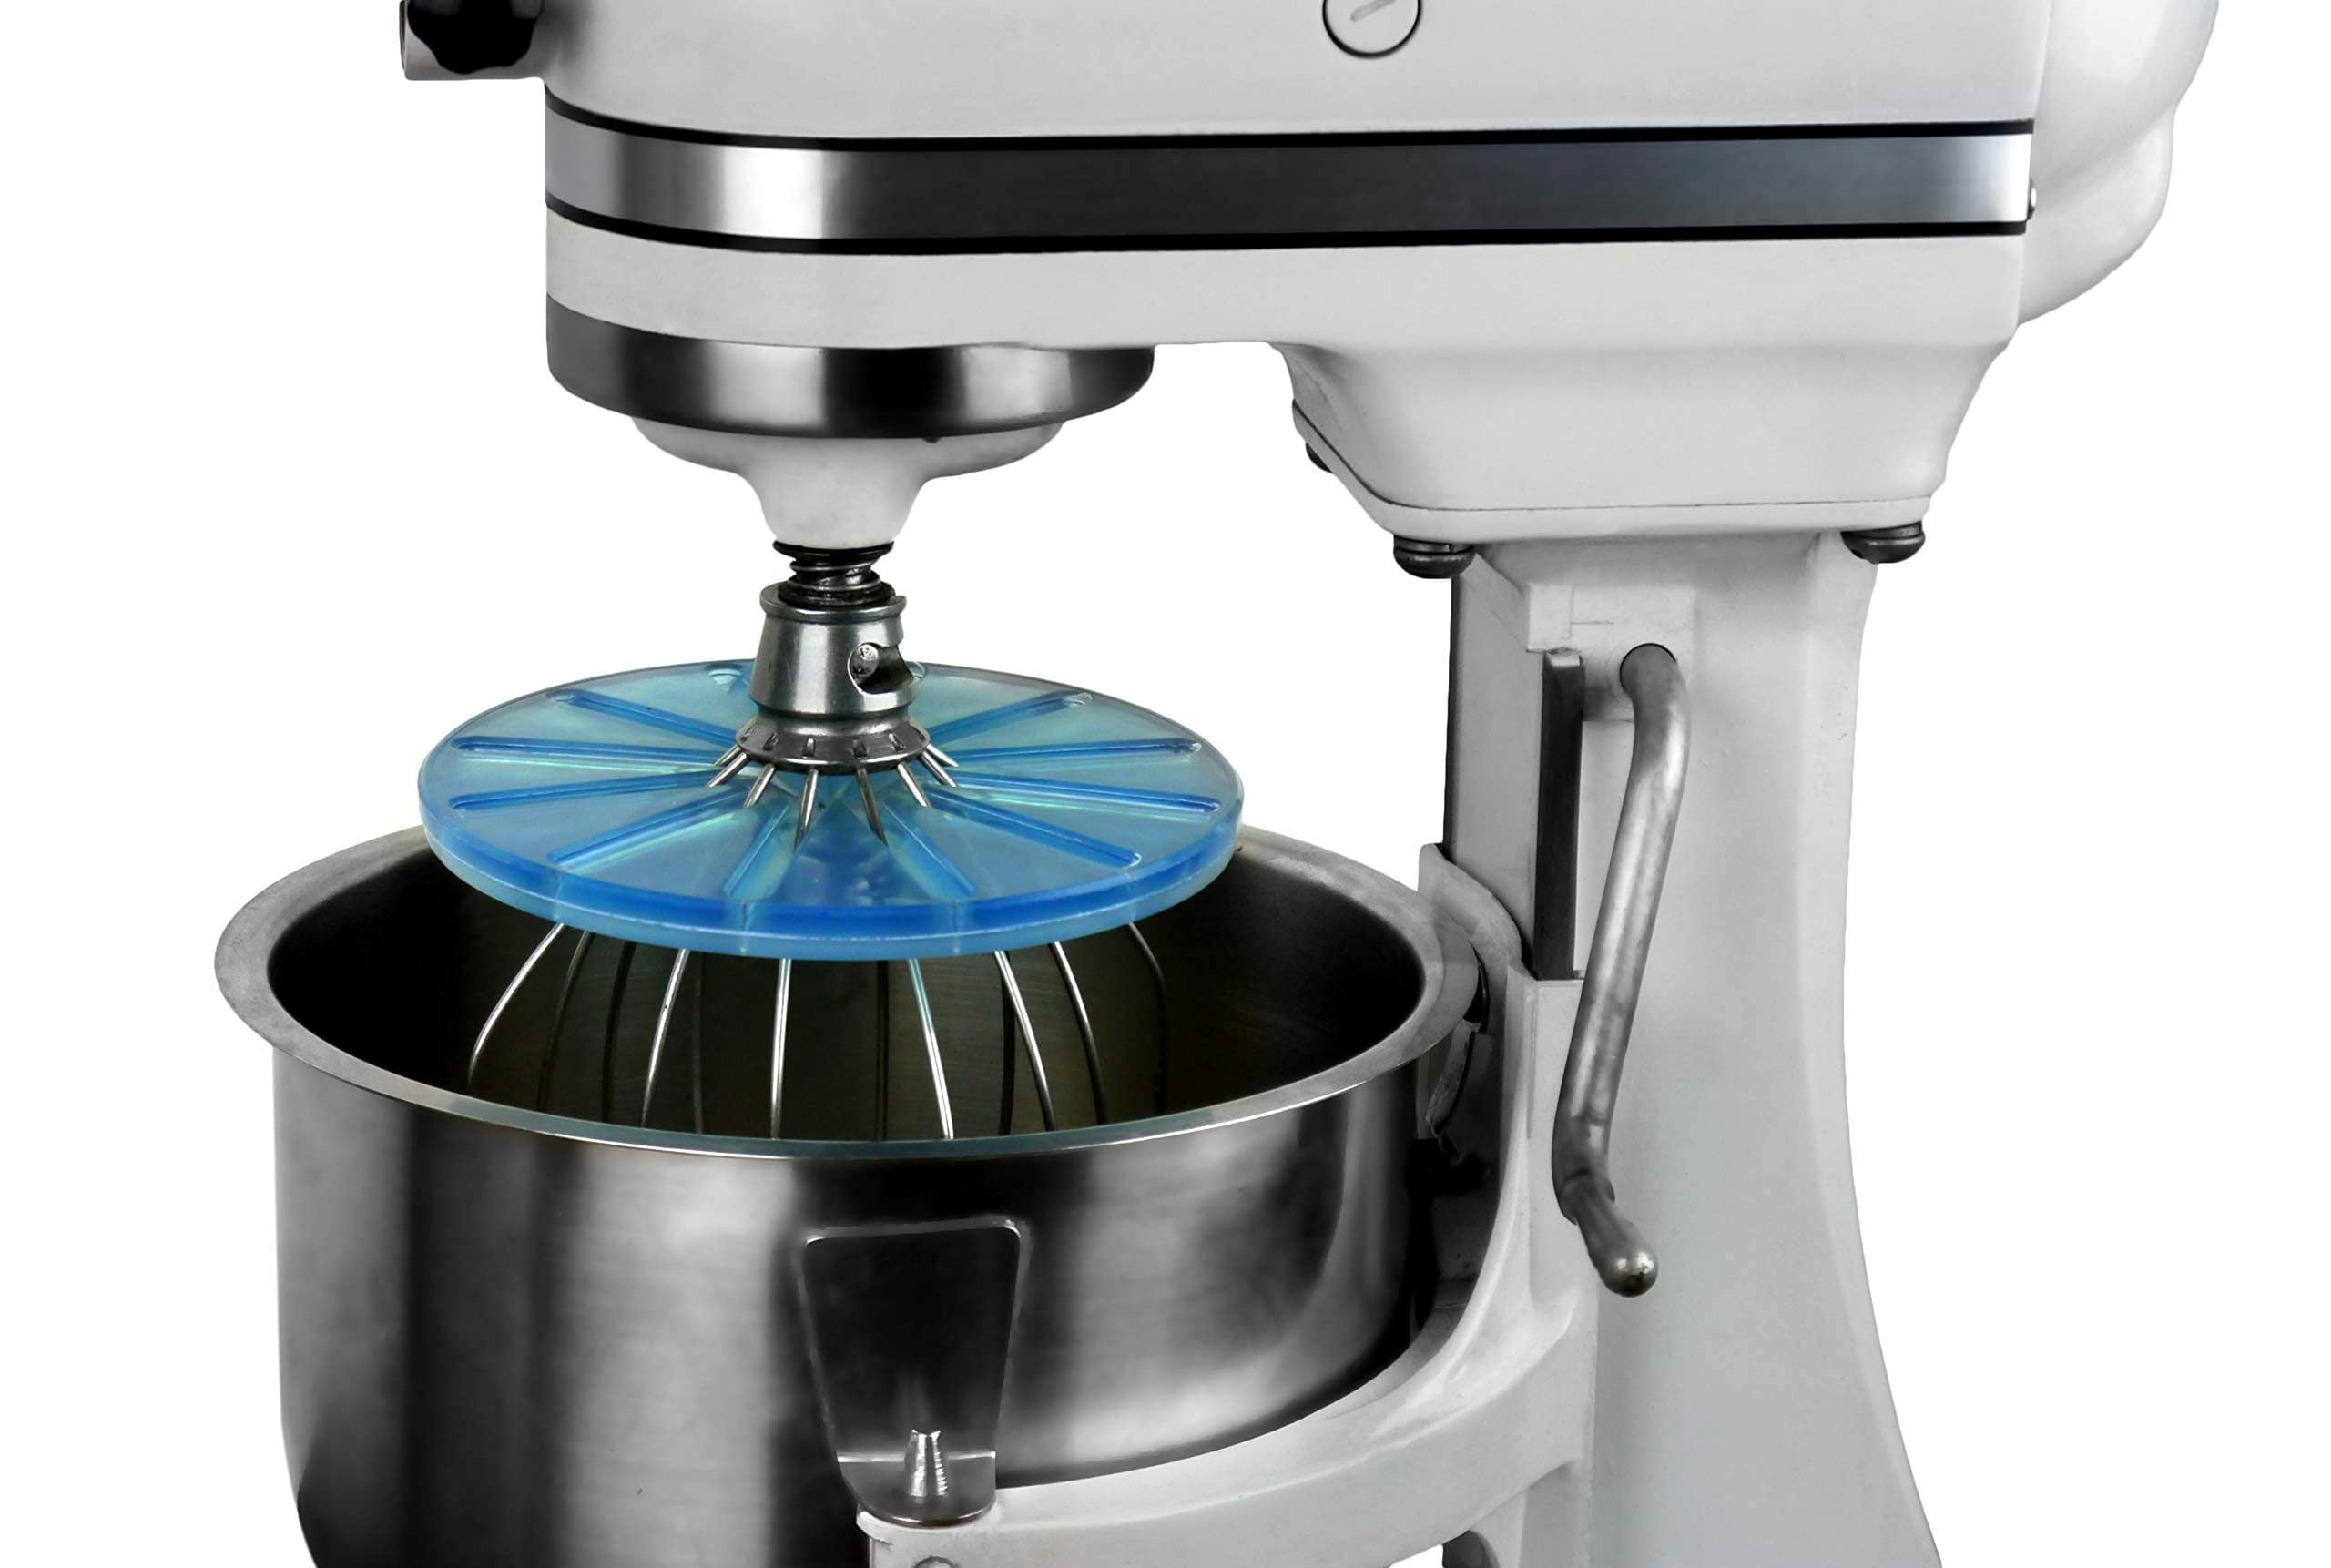 KitchenAid Spiralizer Attachment (Fits all Stand Mixers) (KSM2APC)